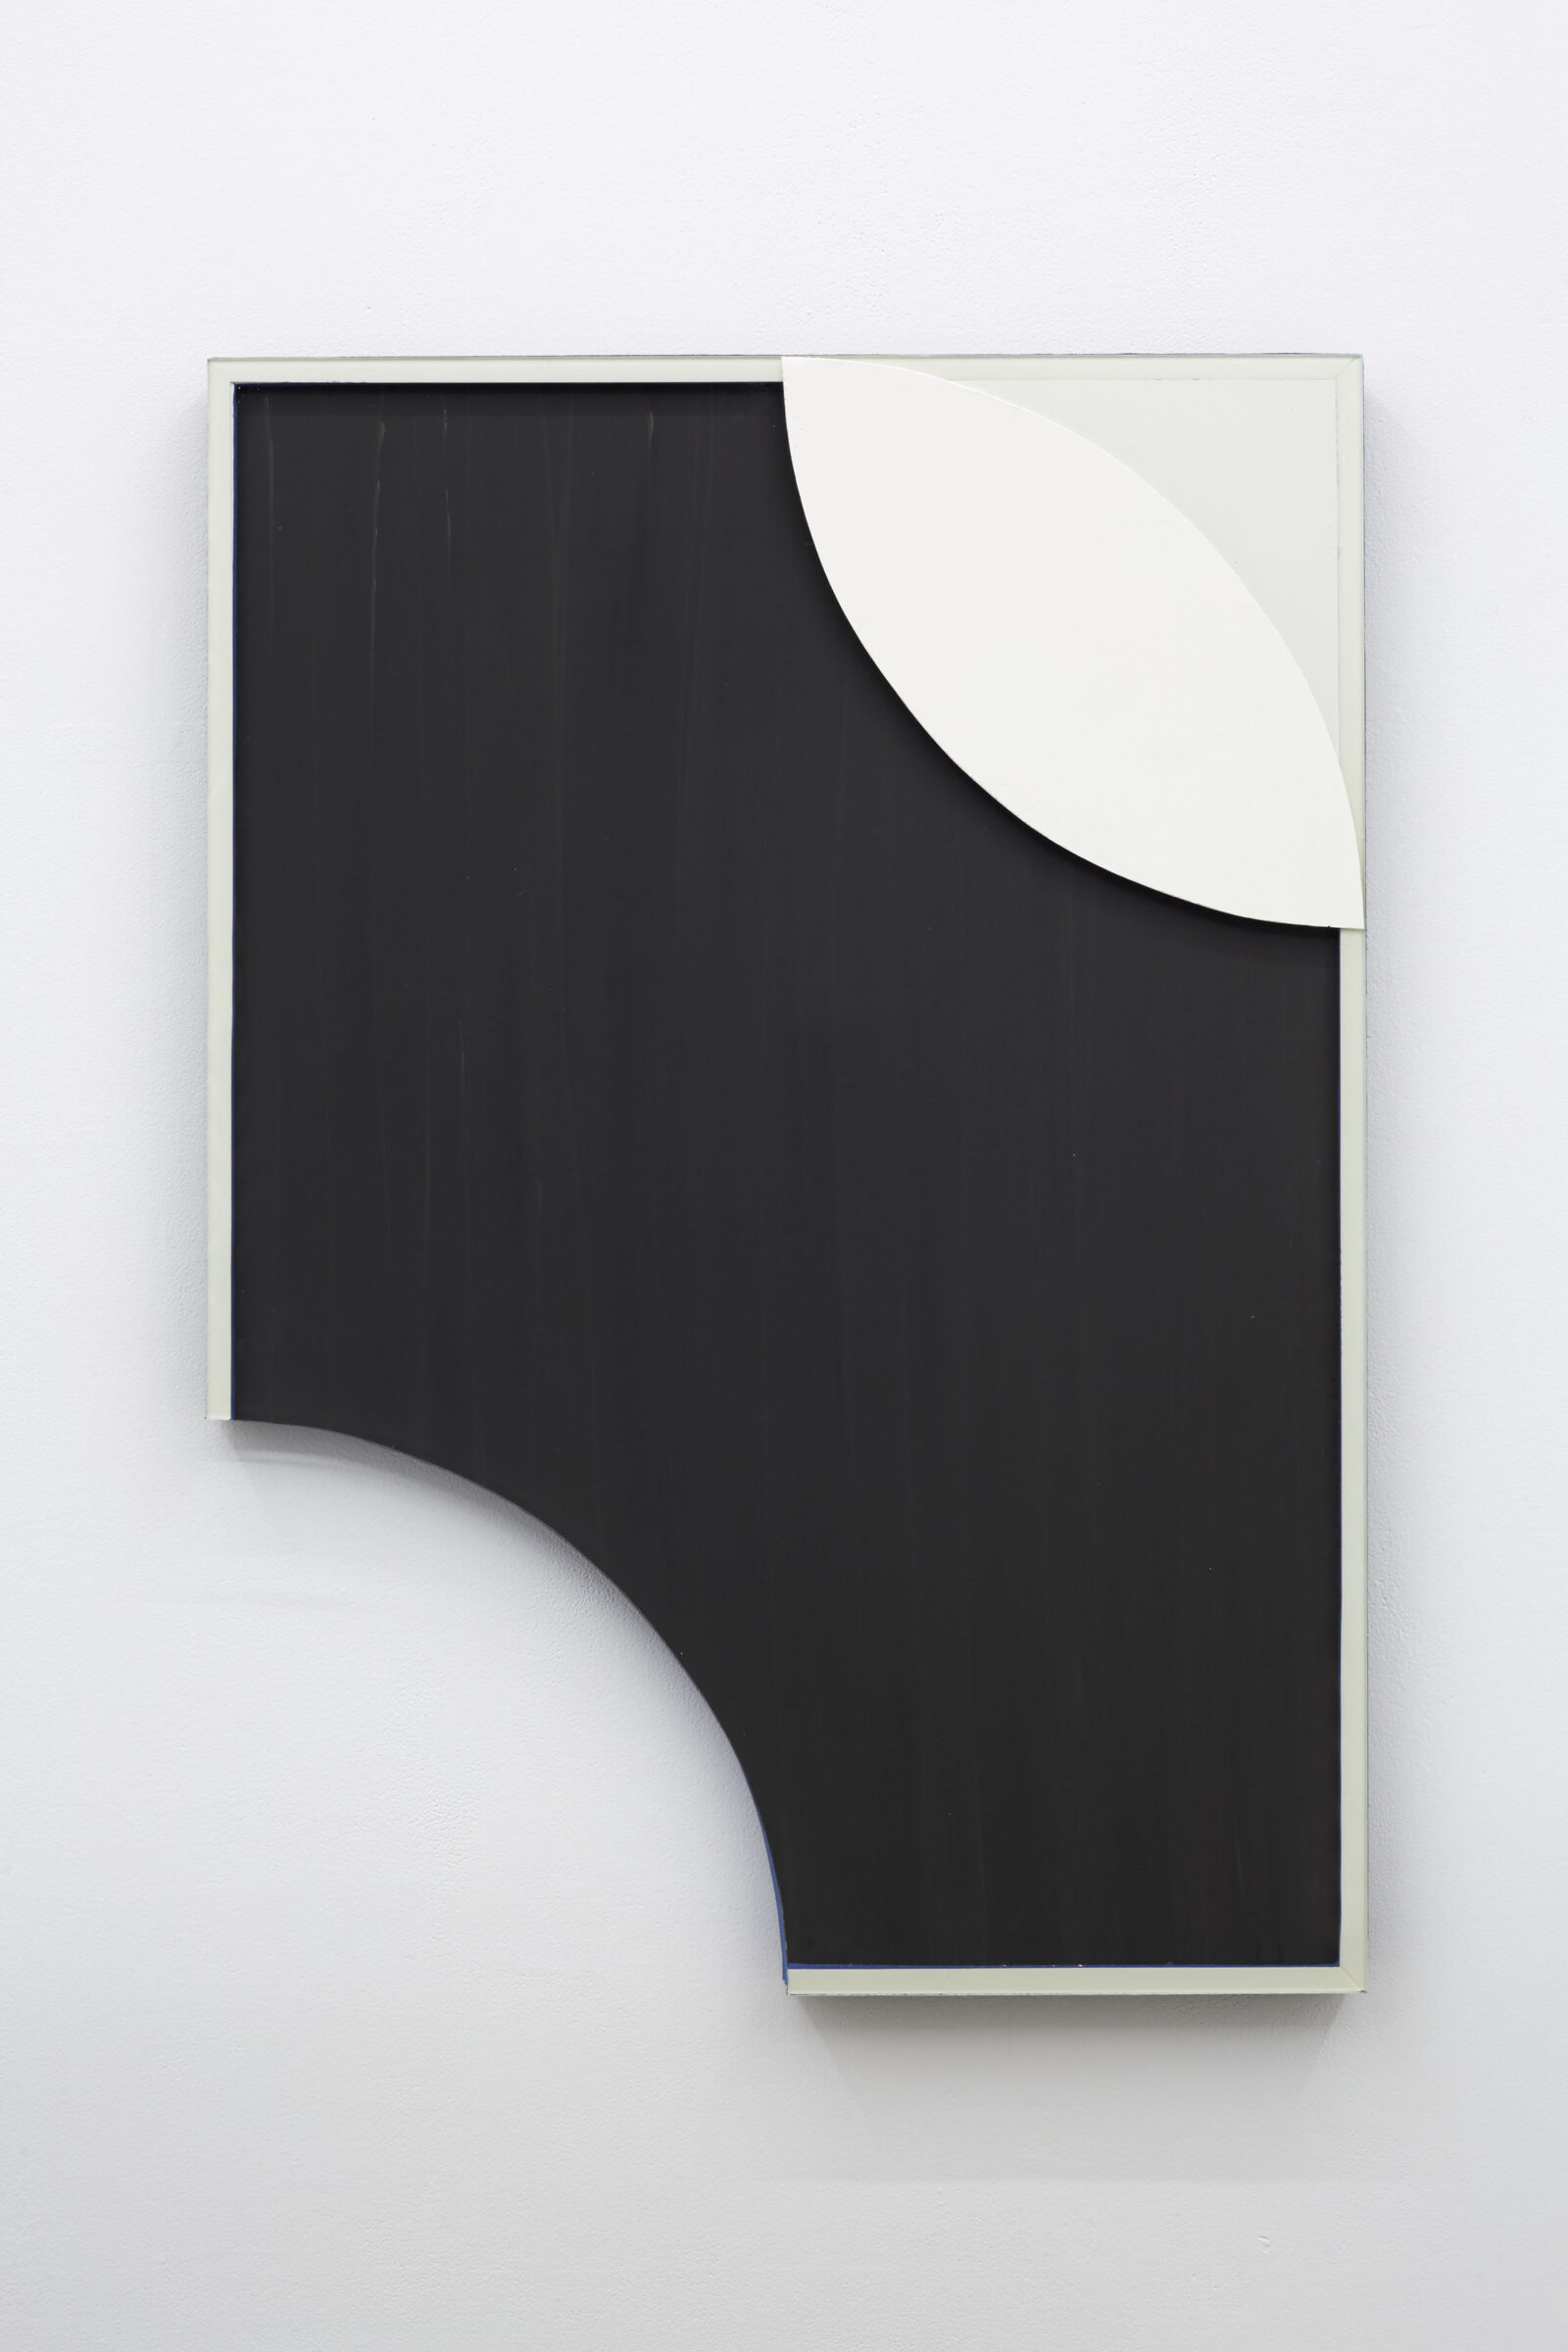 Marcin Zarzeka
Under the Radar over the Top
2015
gouache and plaster on glass, foam board, double-sided tape, rayon tape
69 × 47 cm